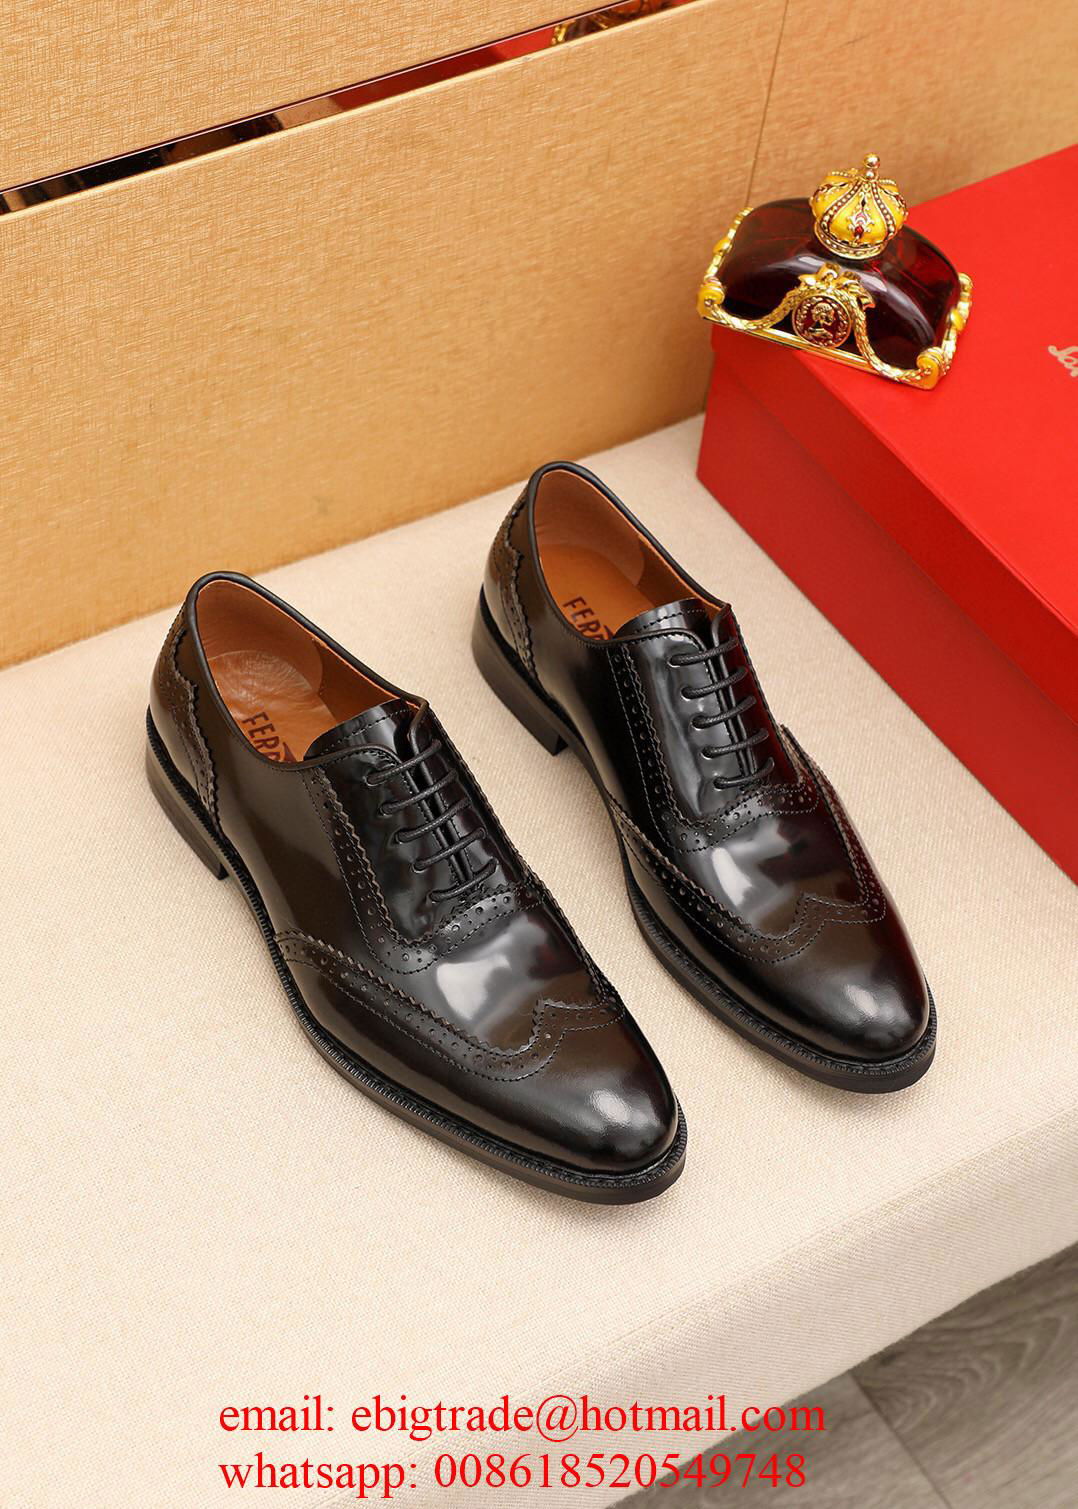 Wholesaler Salvatore           Dress Shoes Men           Leather shoes Price